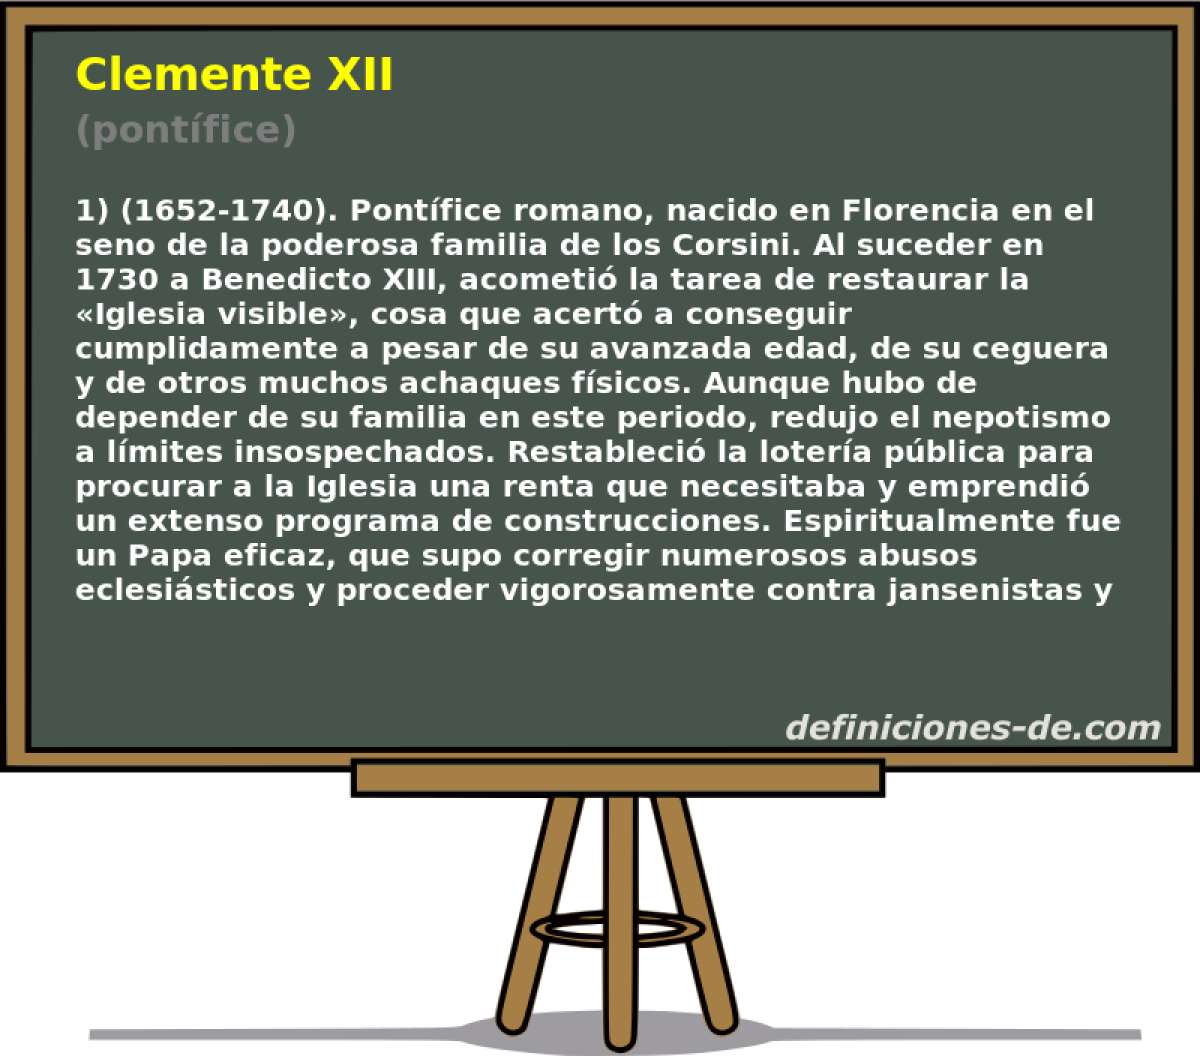 Clemente XII (pontfice)